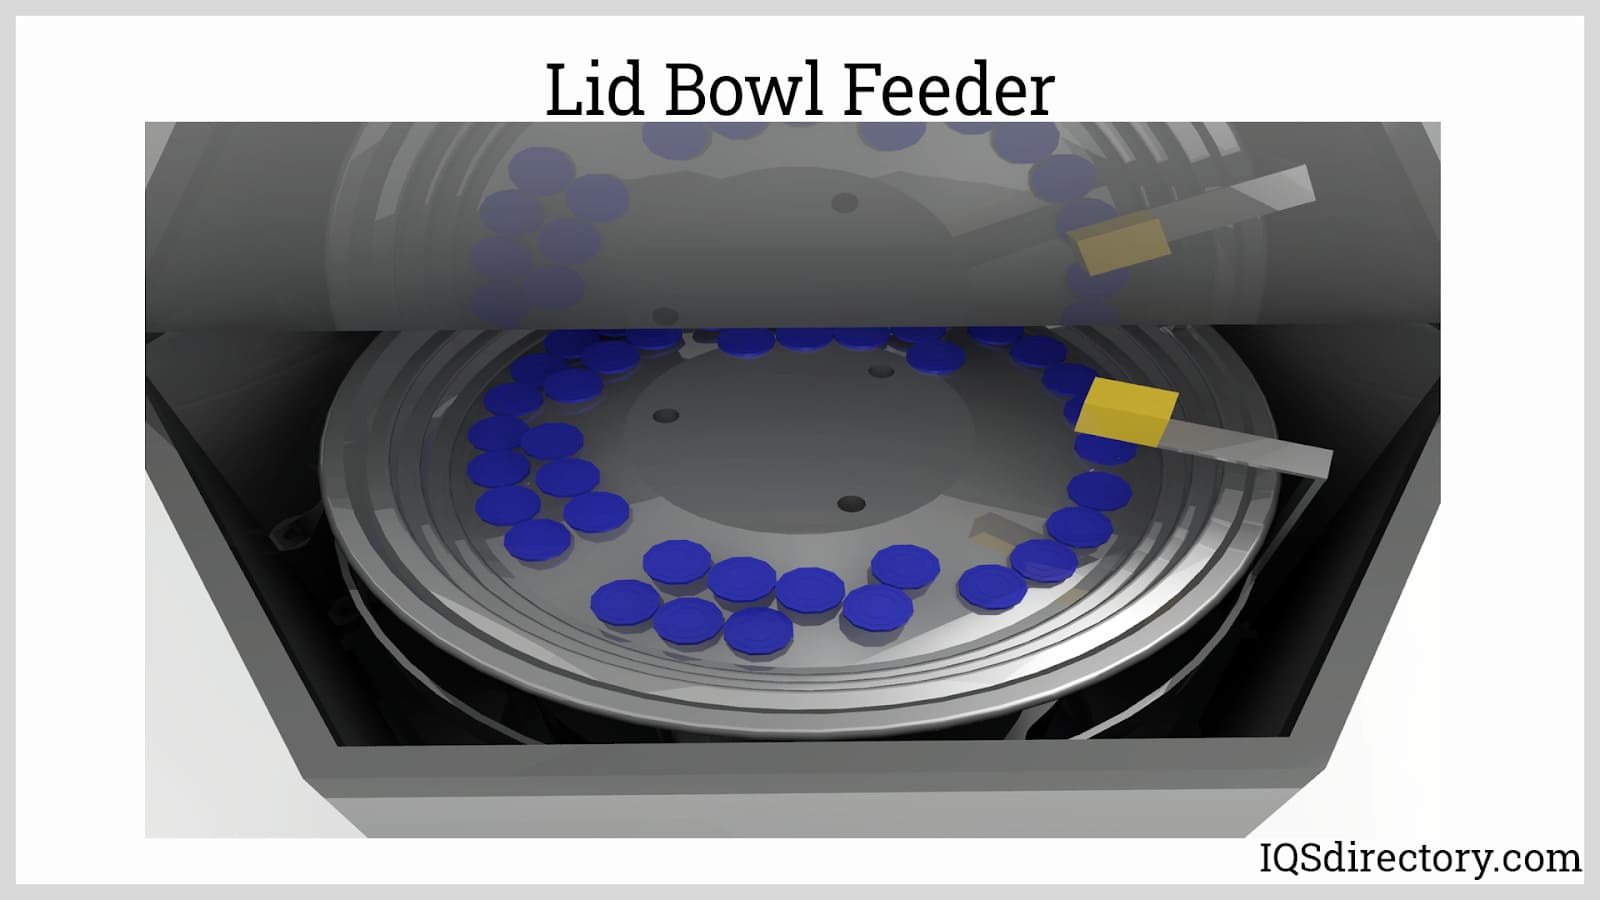 Lid Bowl Feeder